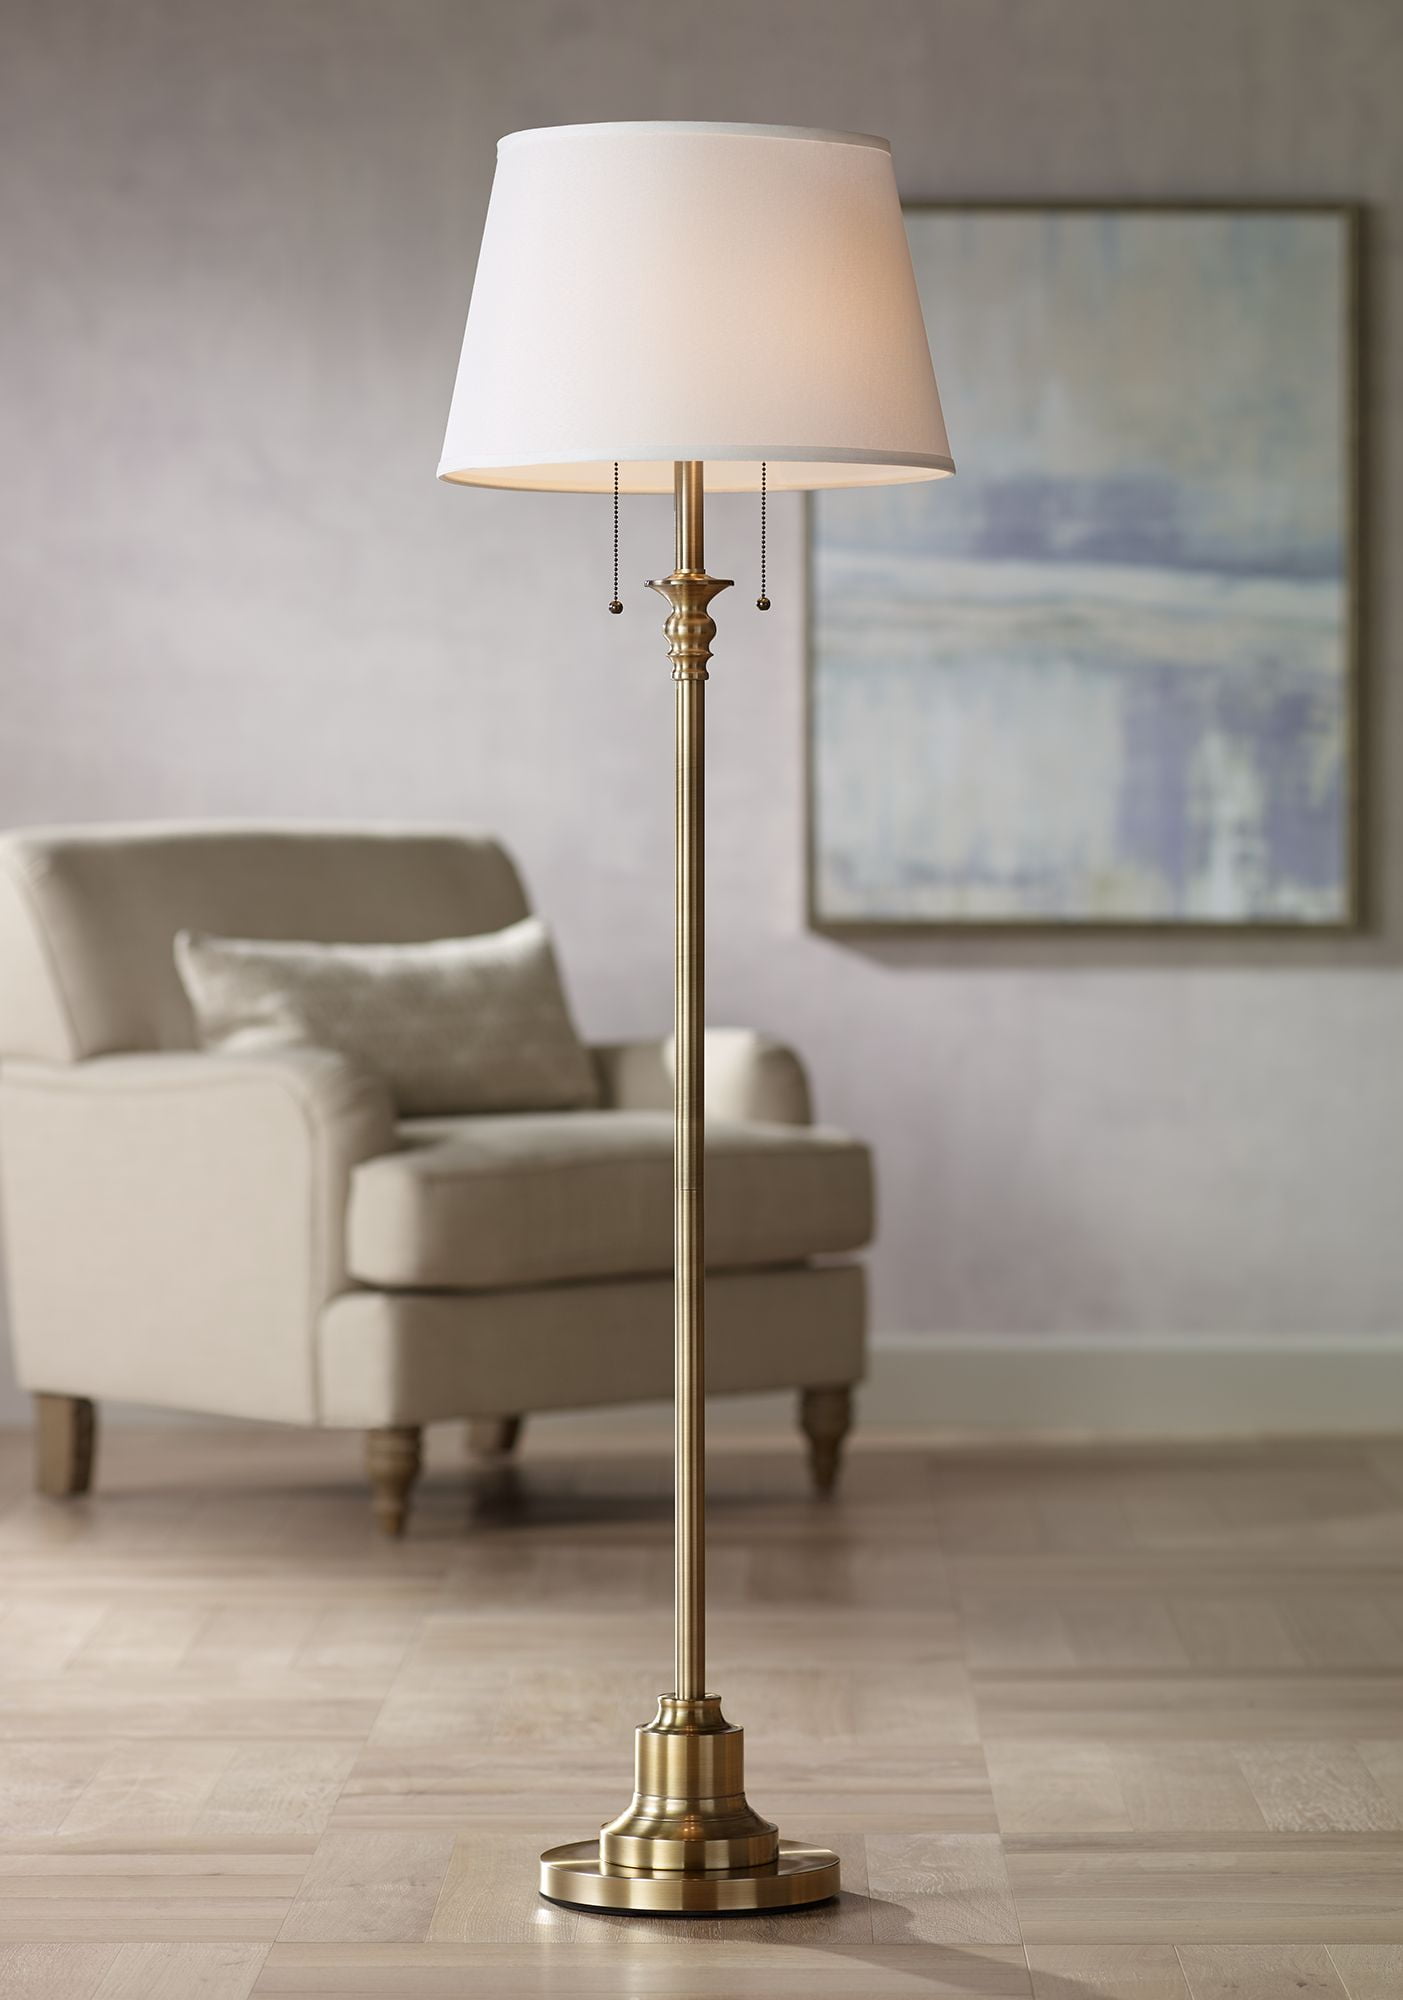 360 Lighting Spenser Vintage Floor Lamp 58 Tall Brushed Antique